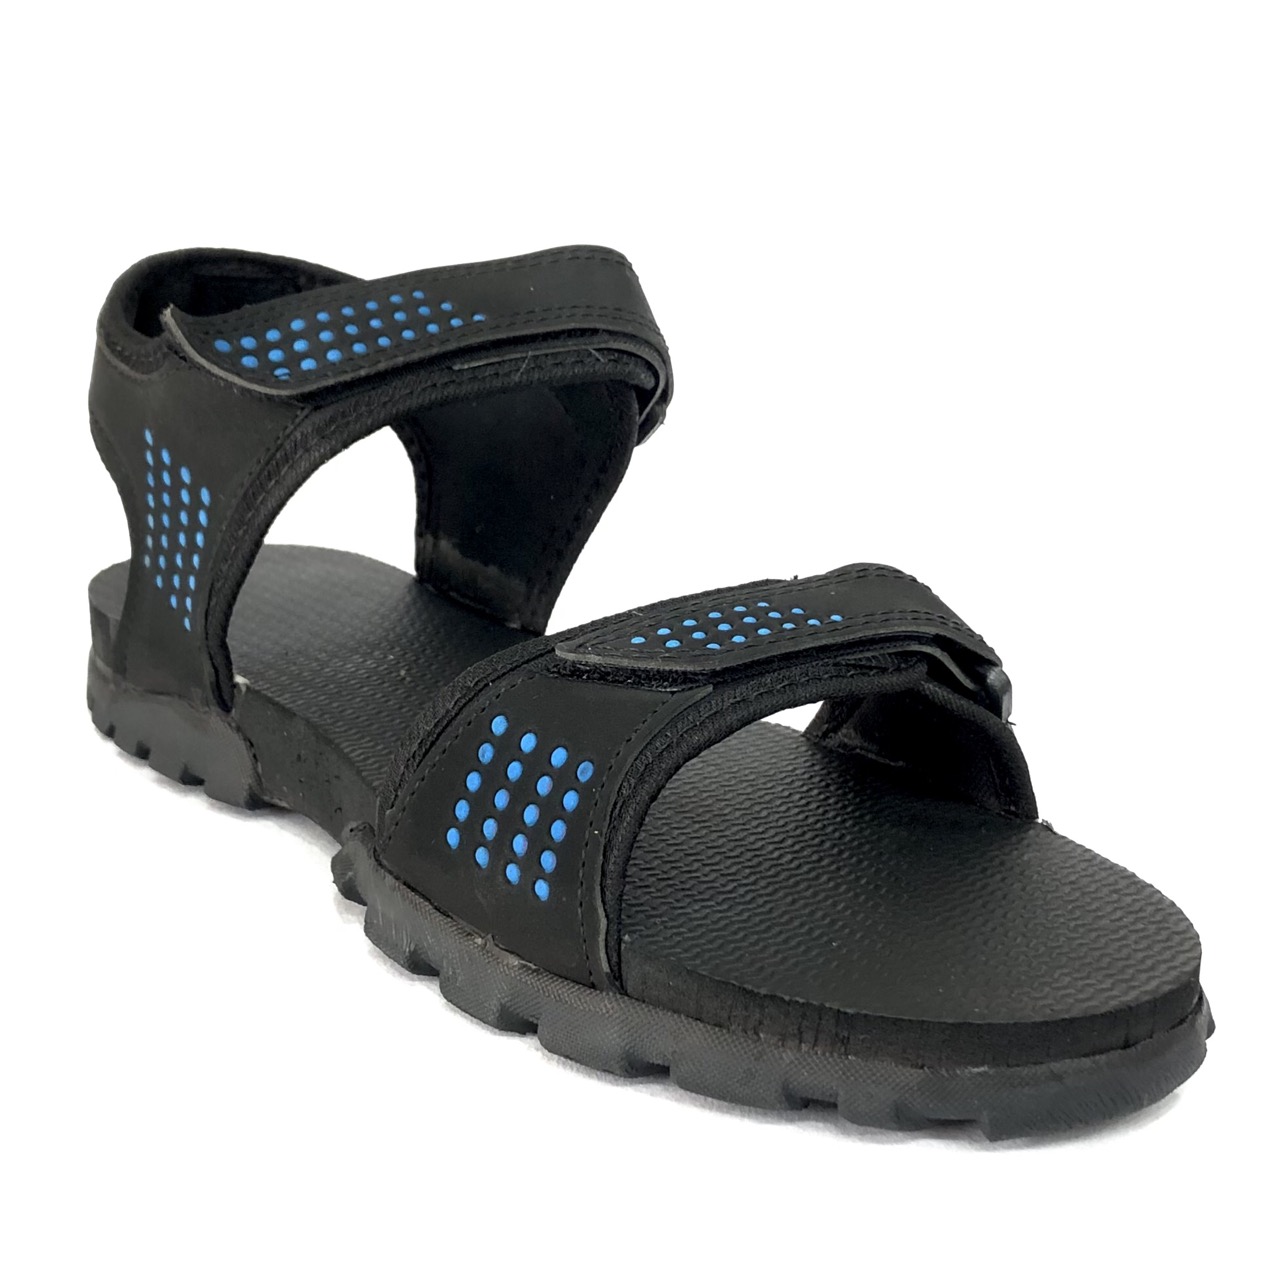 Targetandme - All in Motion sports sandals 🤩 I love them